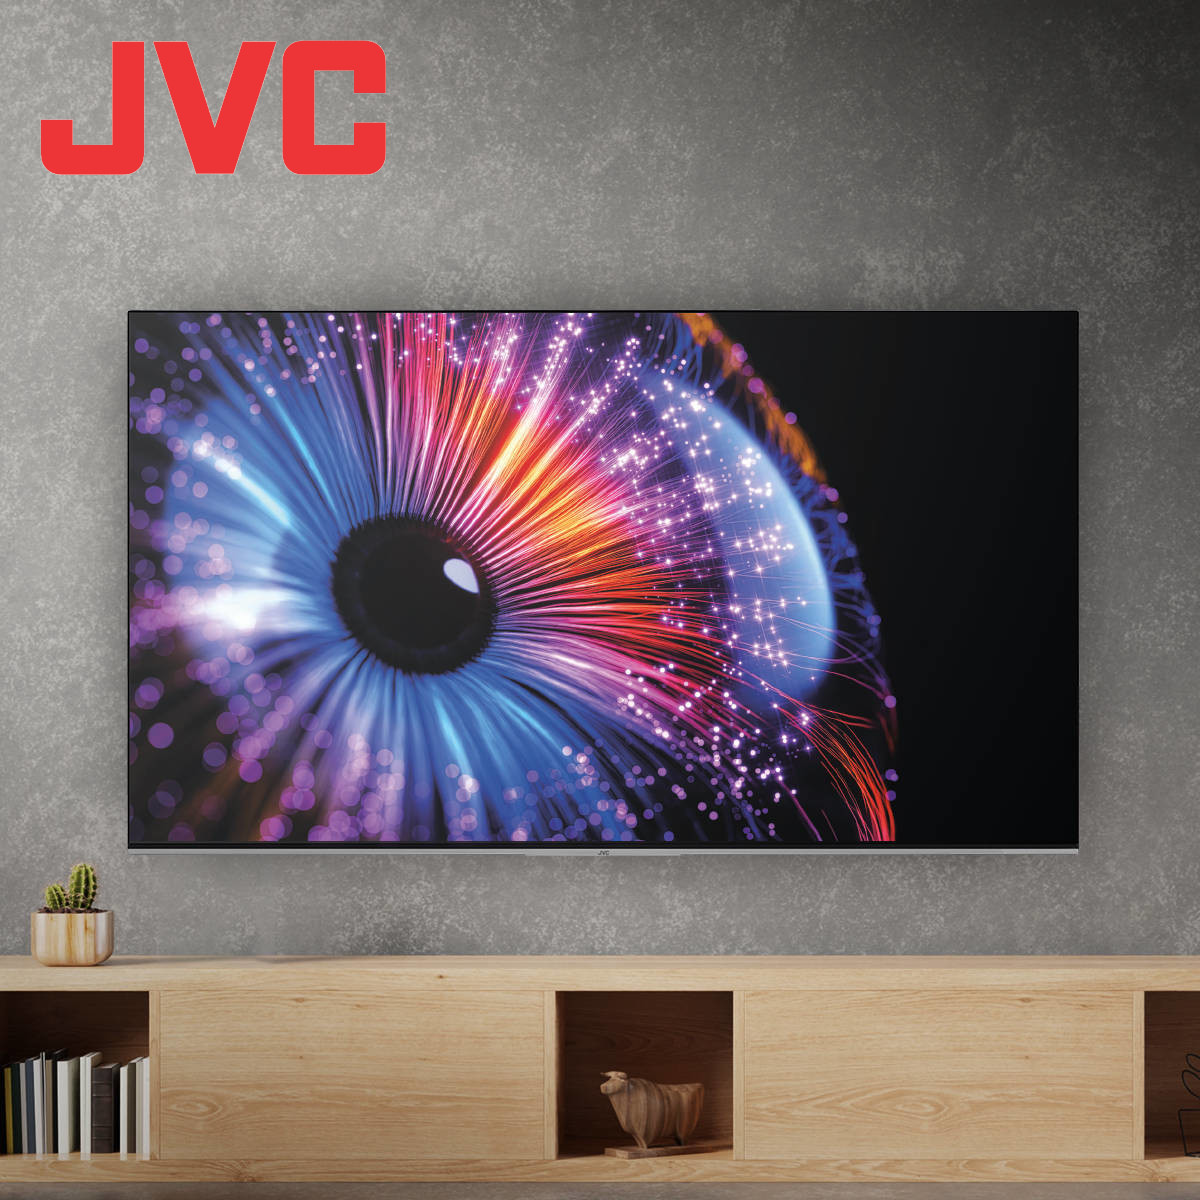 TV JVC